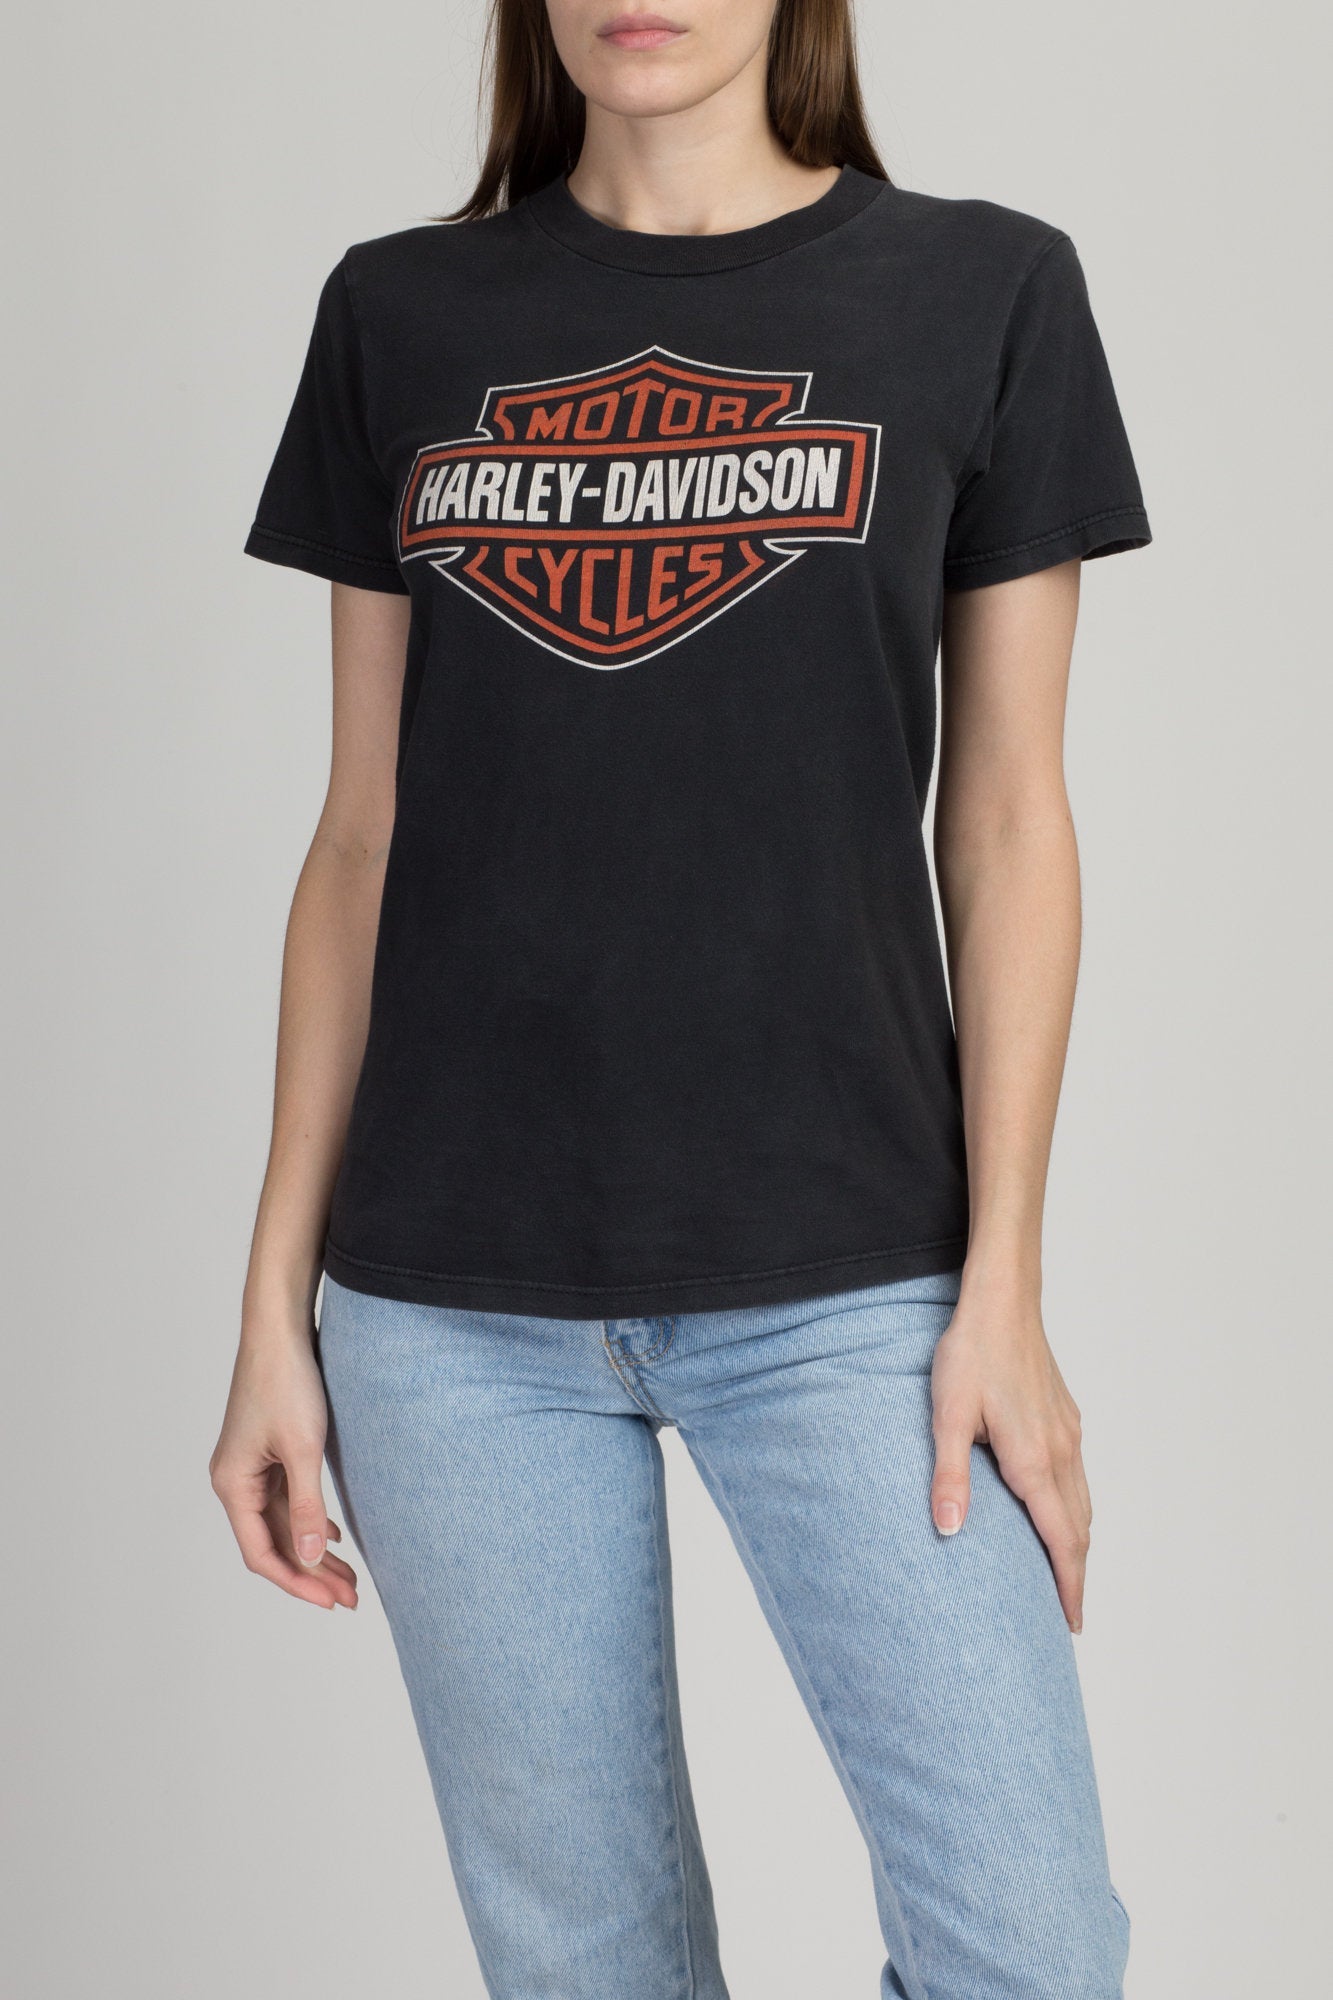 Vintage Harley Davidson Javelina T Shirt - Small 